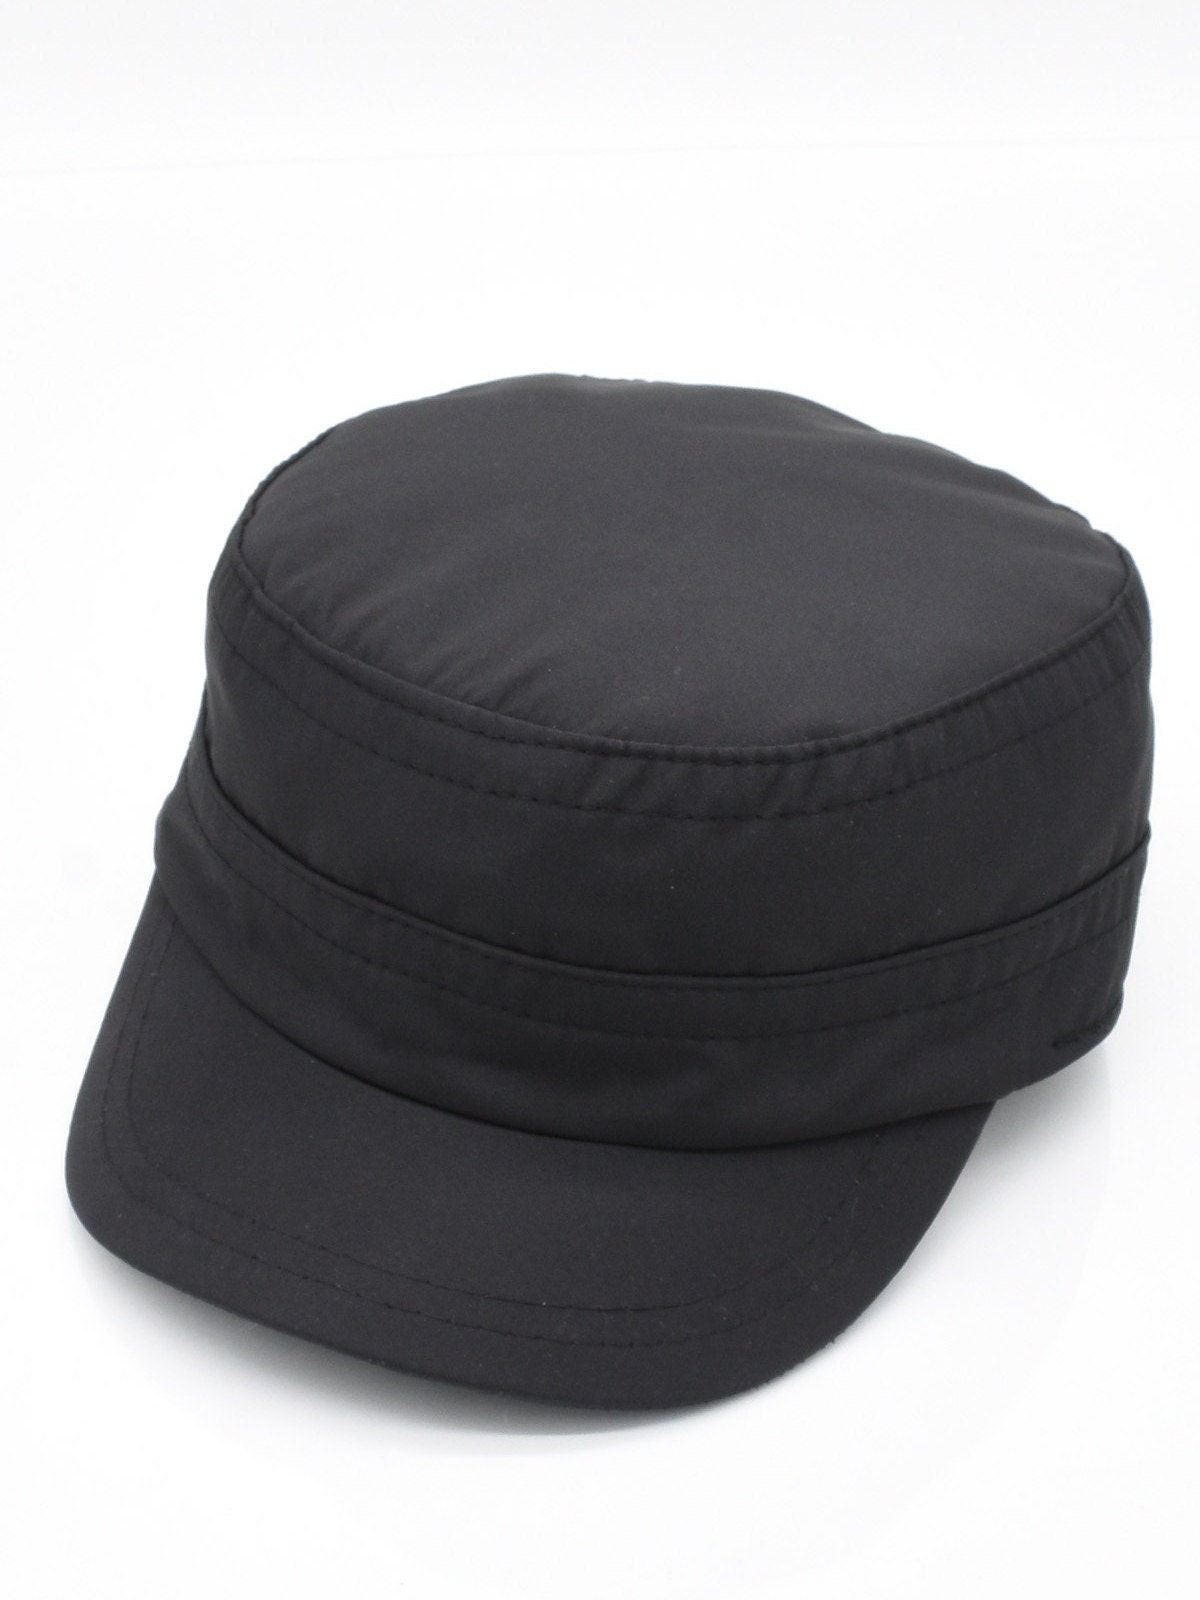 Gorra camper impermeable, gorra militar negra, sombreros del ejército cadete  de secado rápido, sombrero de copa plano militar para hombre -  México